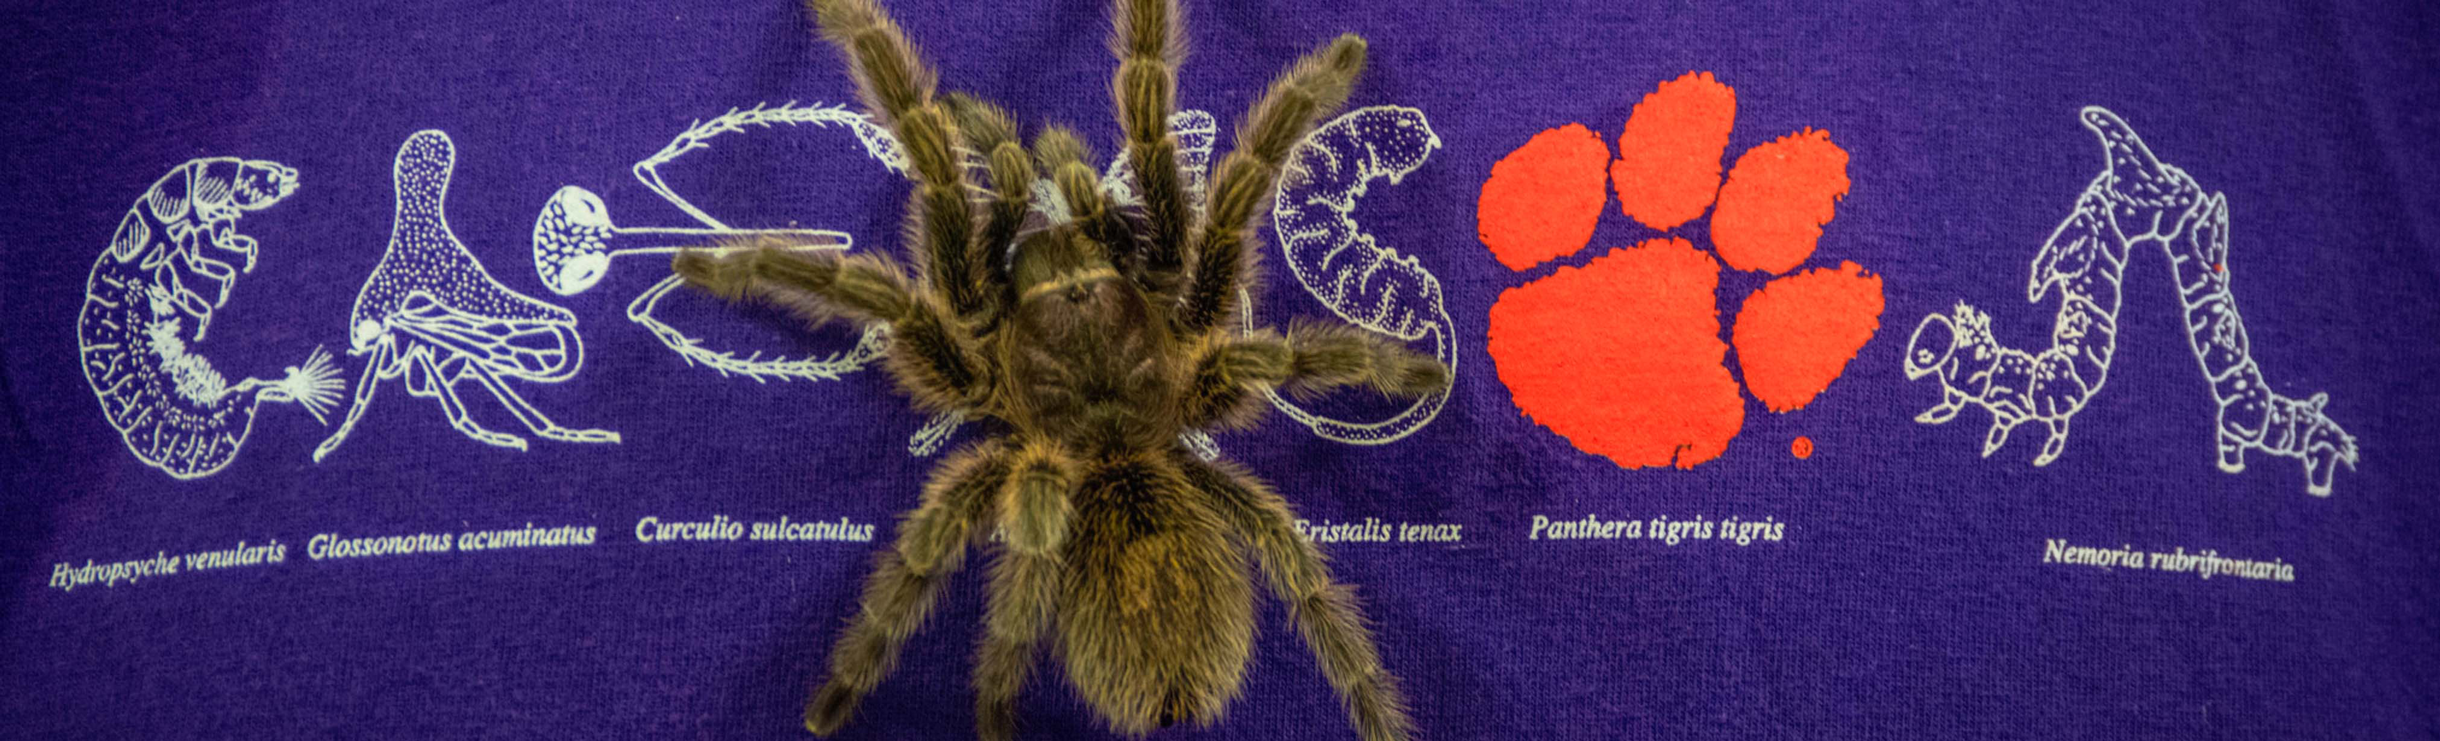 live tarantula on a shirt with the entomology club logo on it